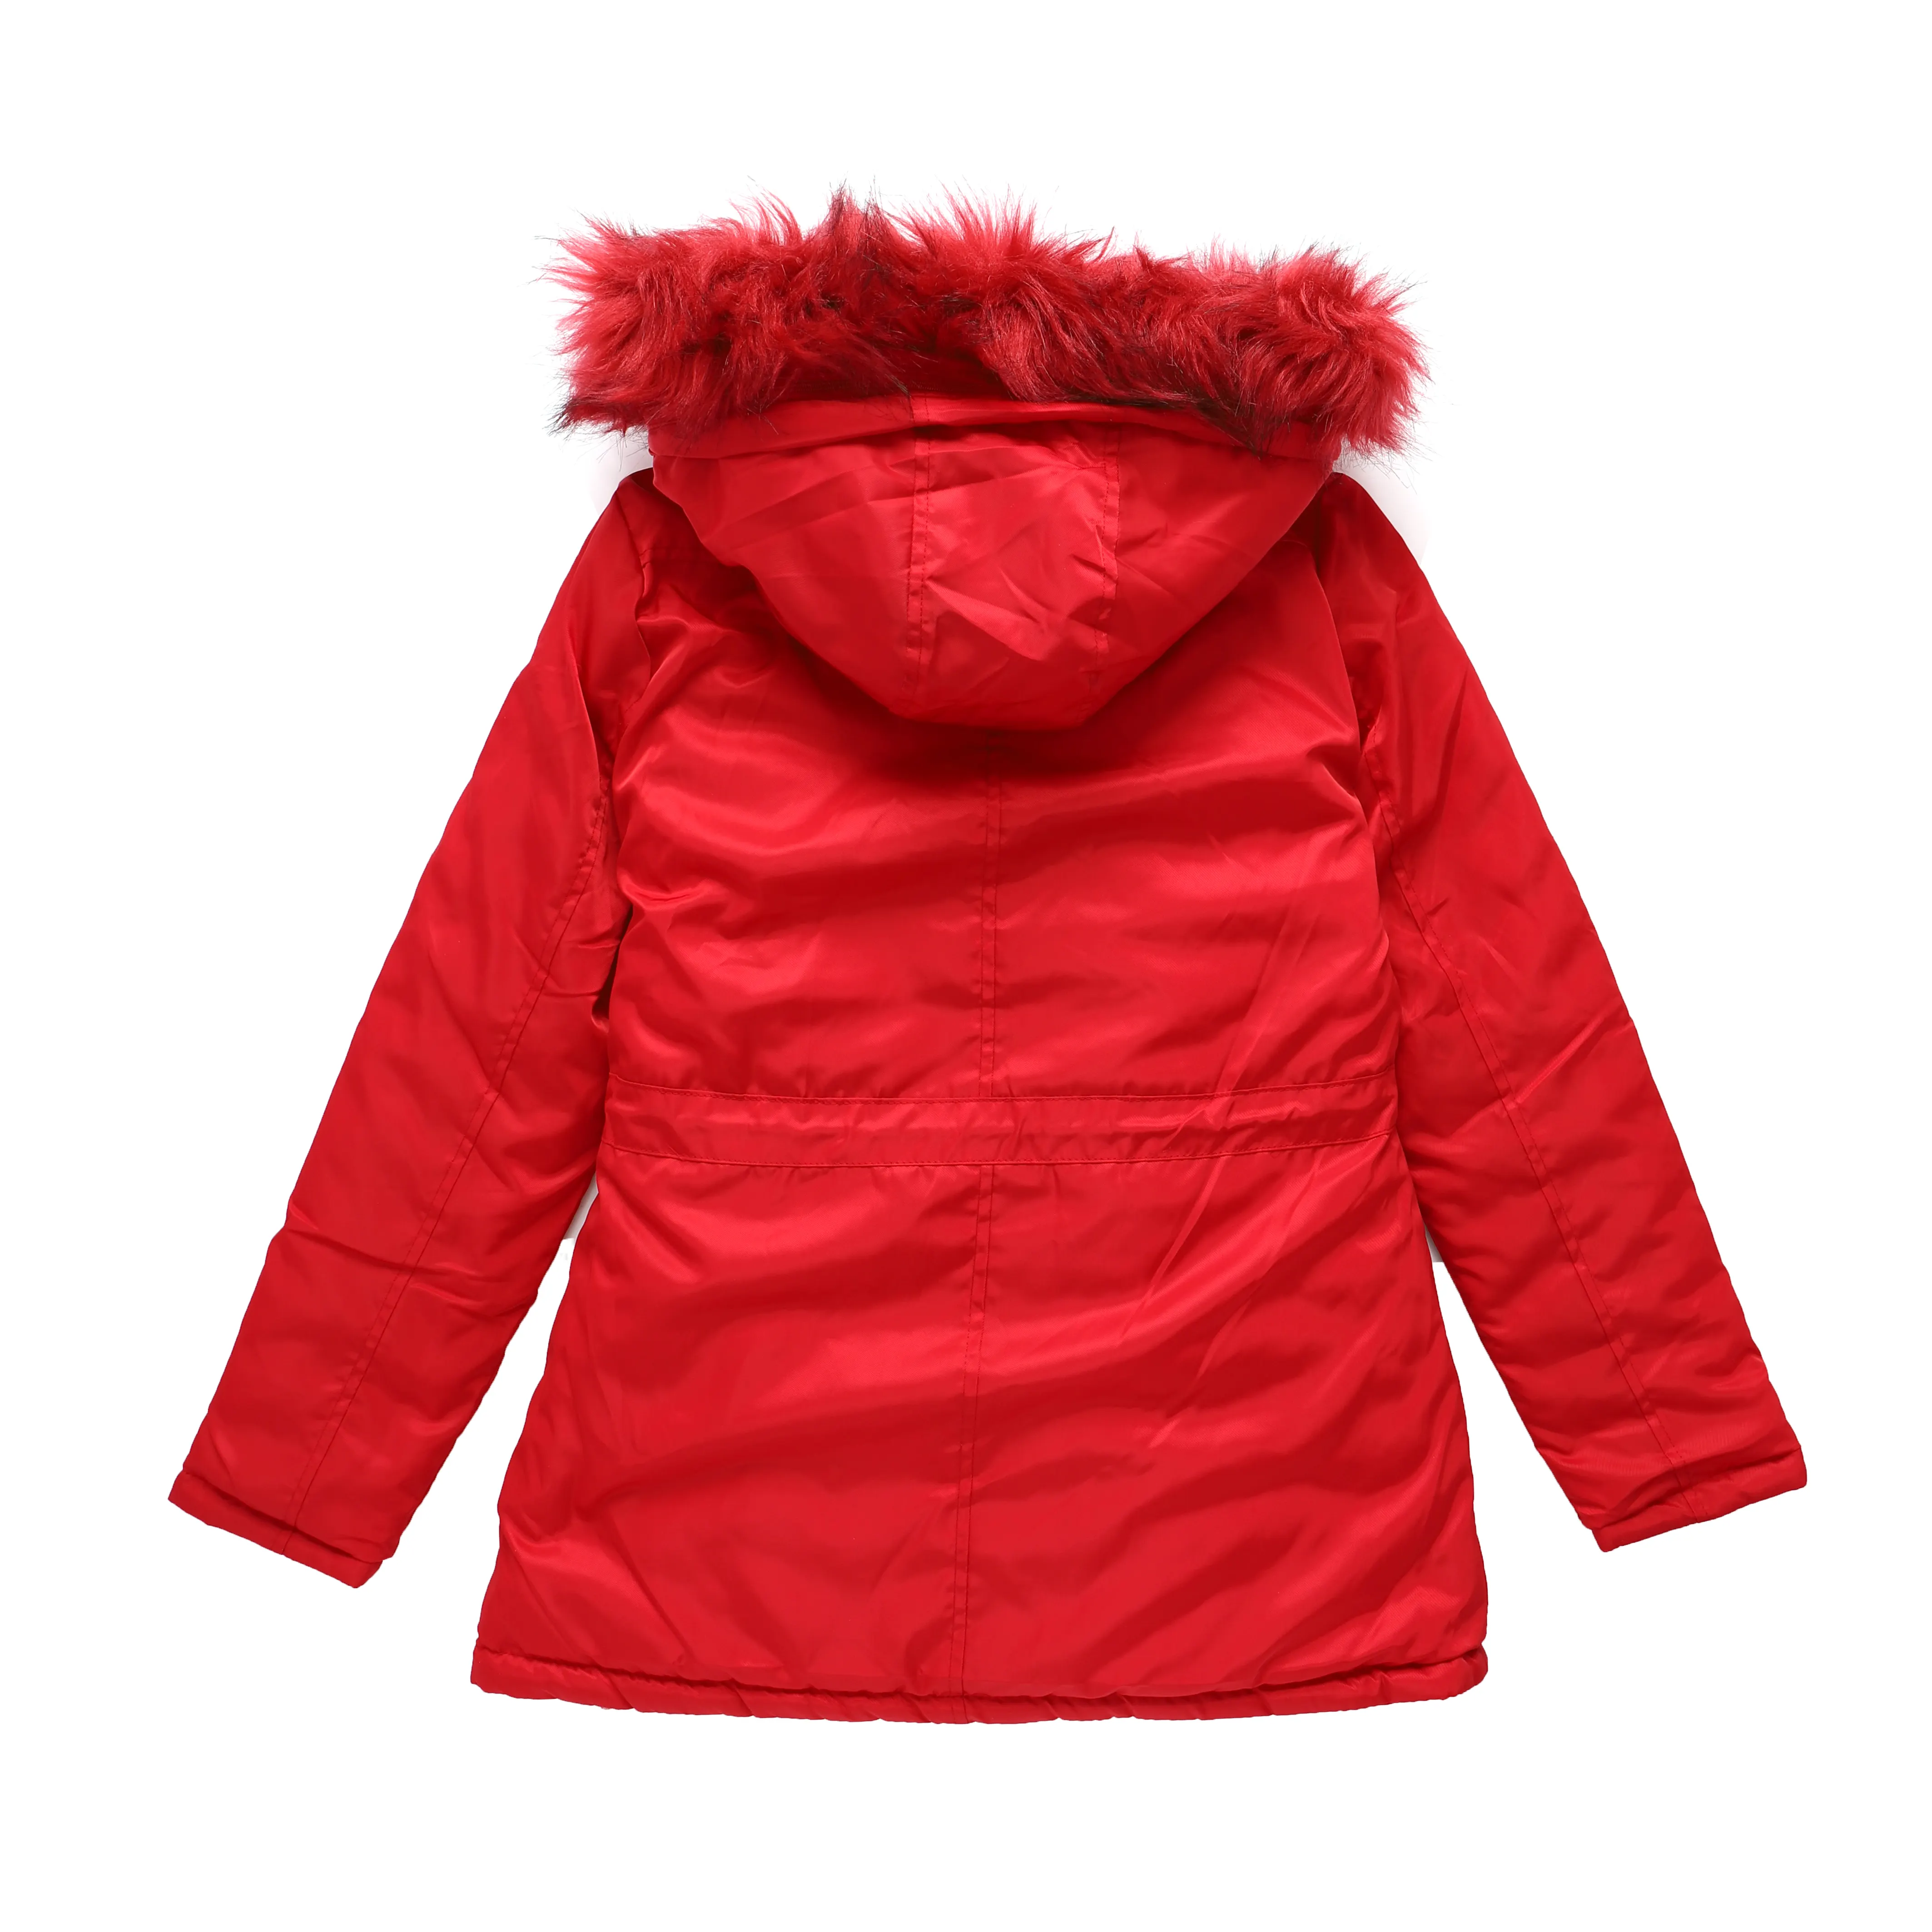 Waterproof Windproof Ladies Casual Keep Warm Jacket Fashion Women Outdoor Reversible Jacket YM004